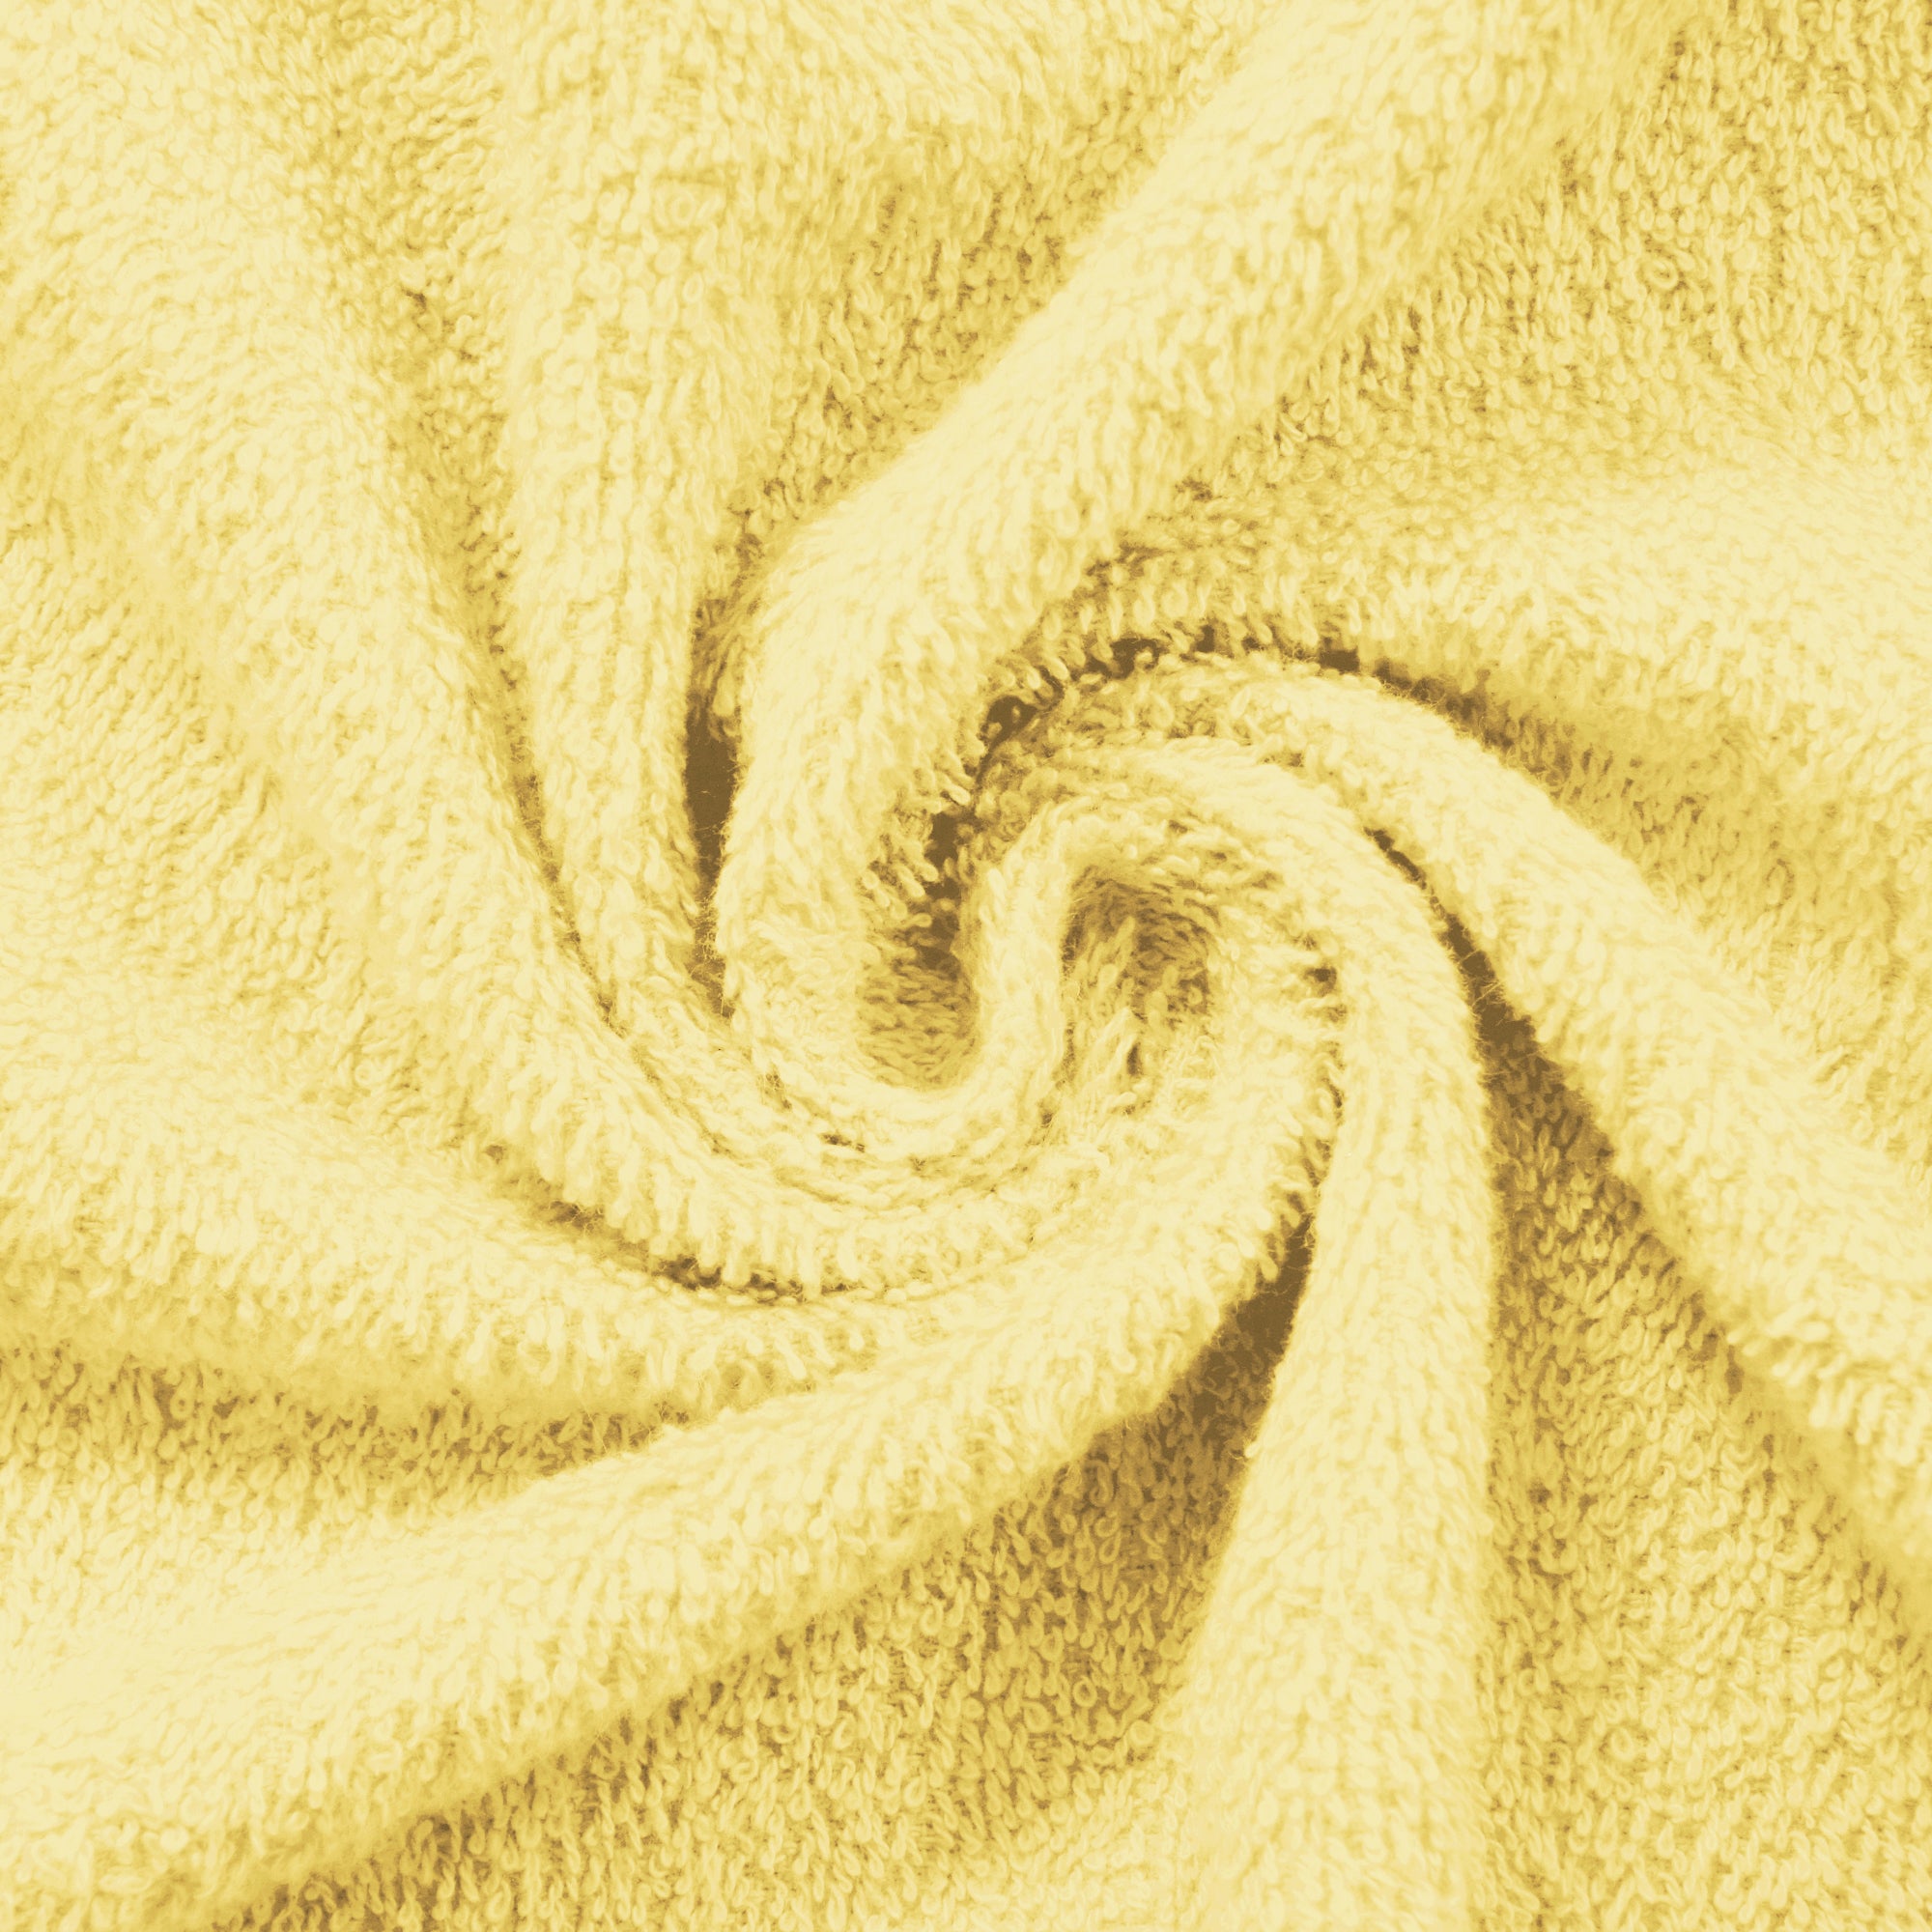 Story@Home 20 Units 100% Cotton Face Towels - Lemon Yellow